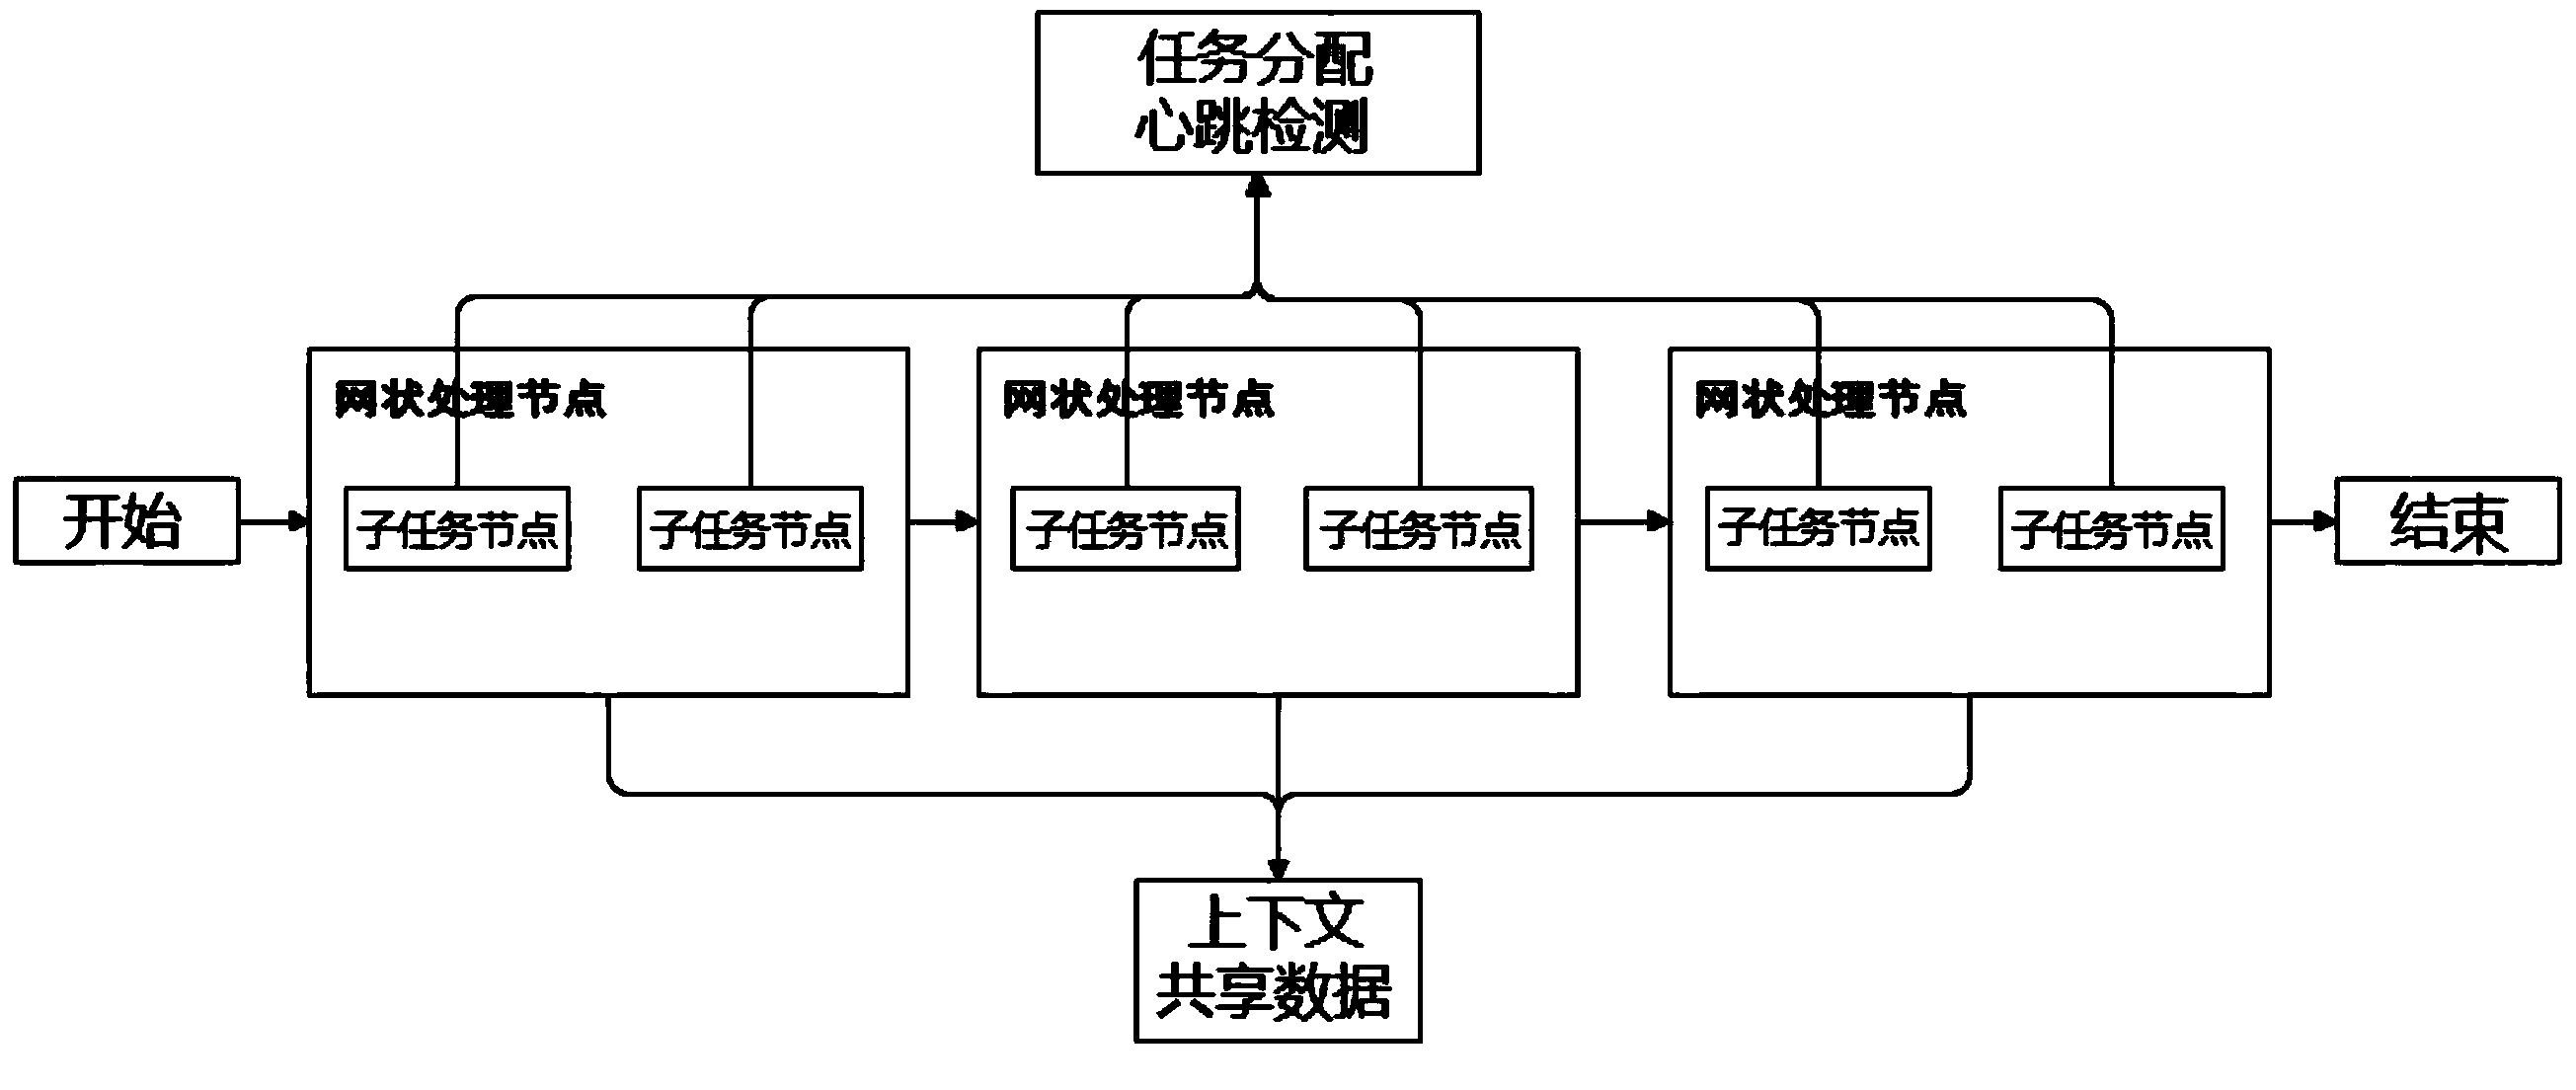 Task processing method based on computer cluster